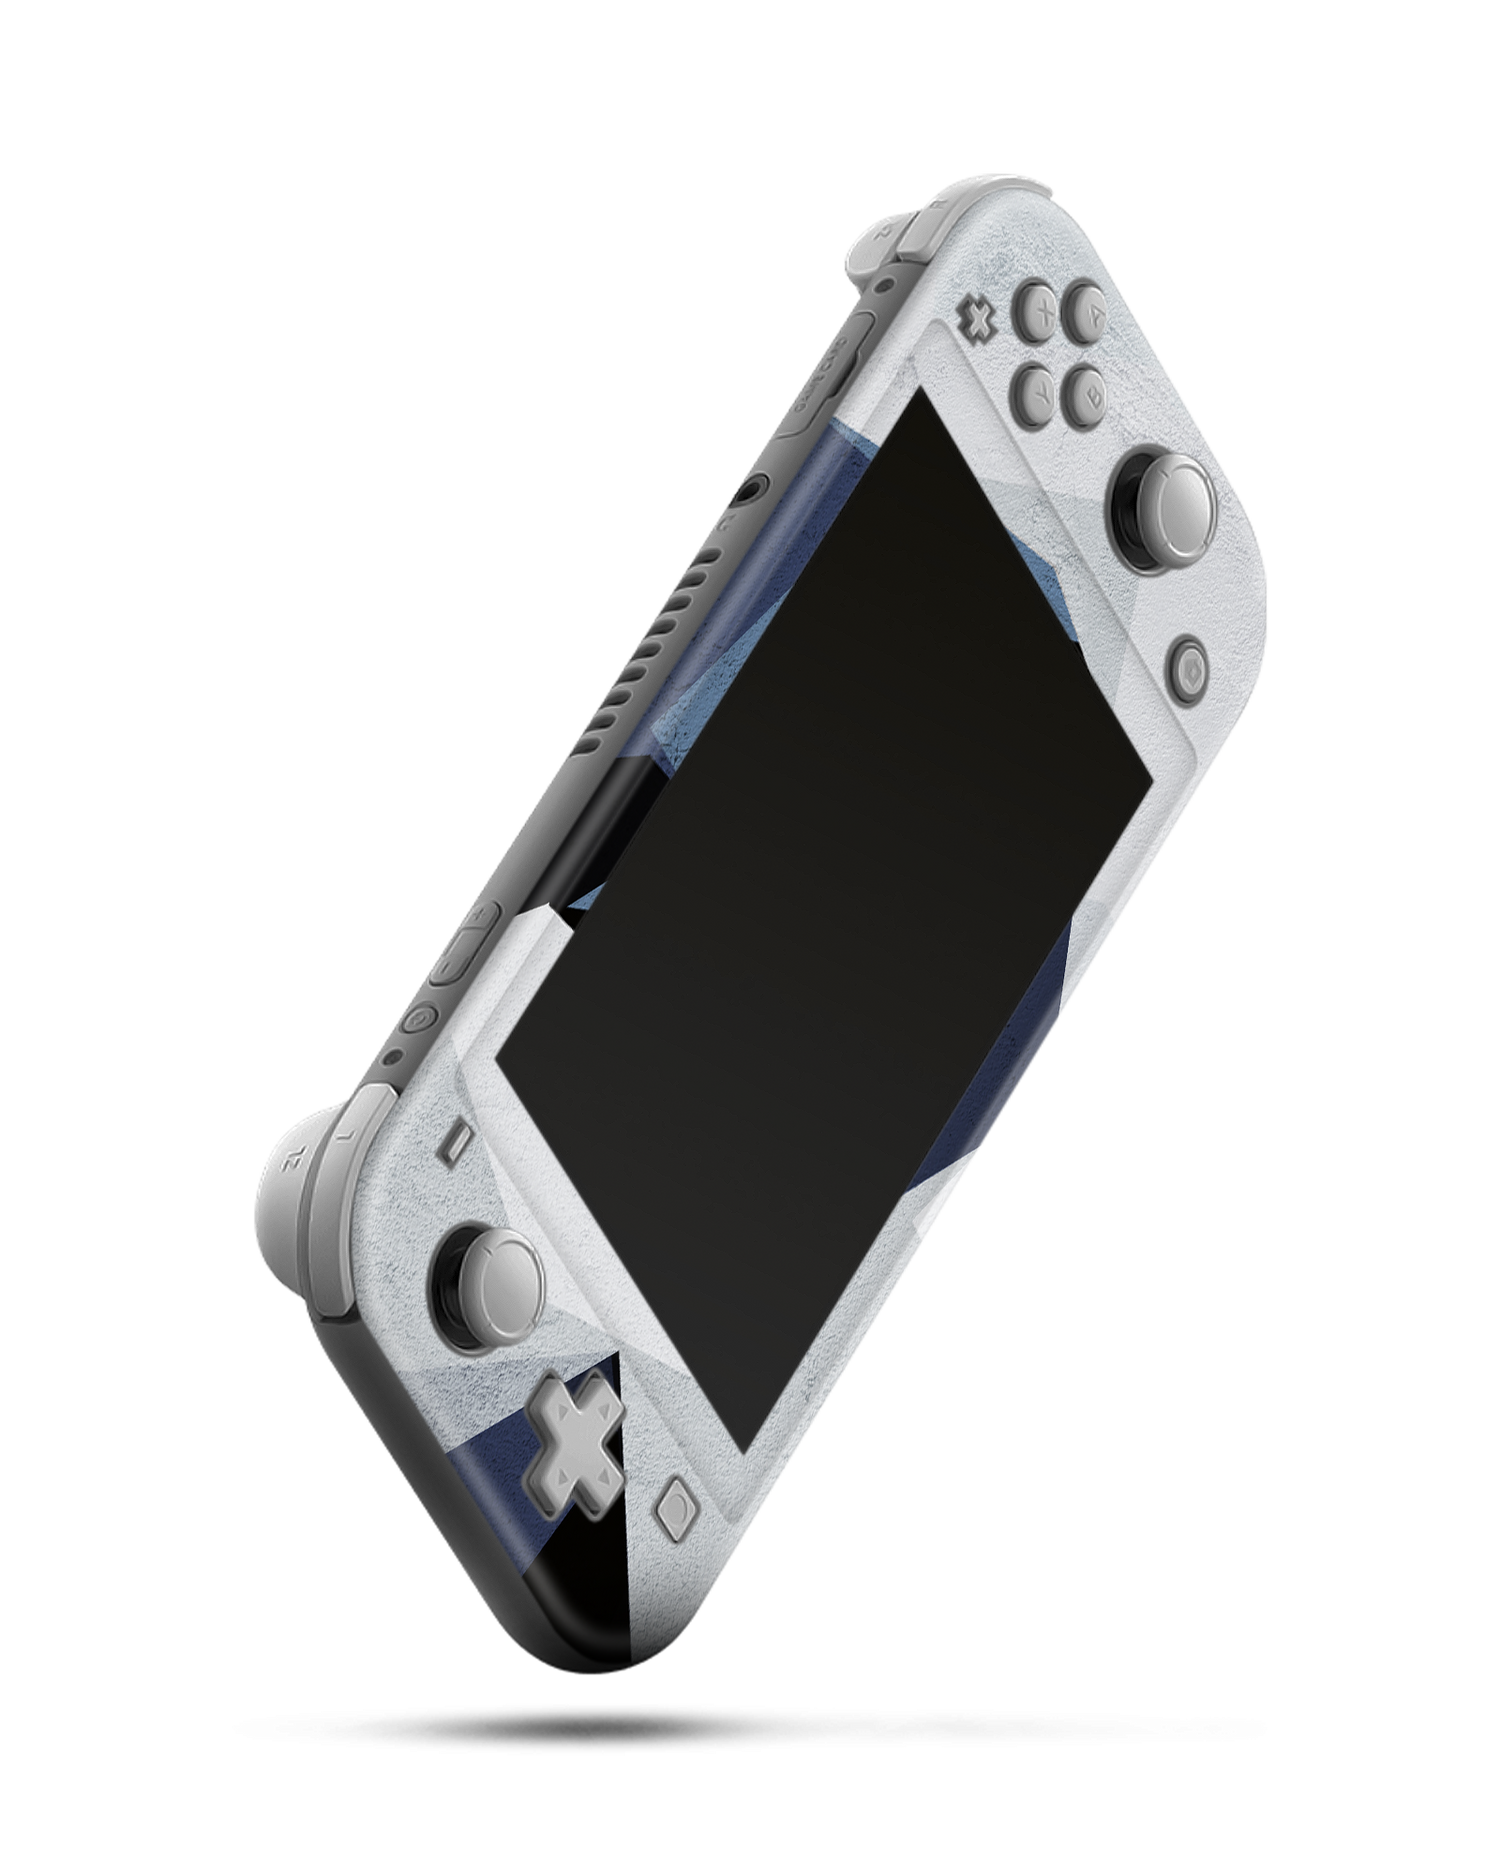 Geometric Camo Blue Console Skin for Nintendo Switch Lite: Side view